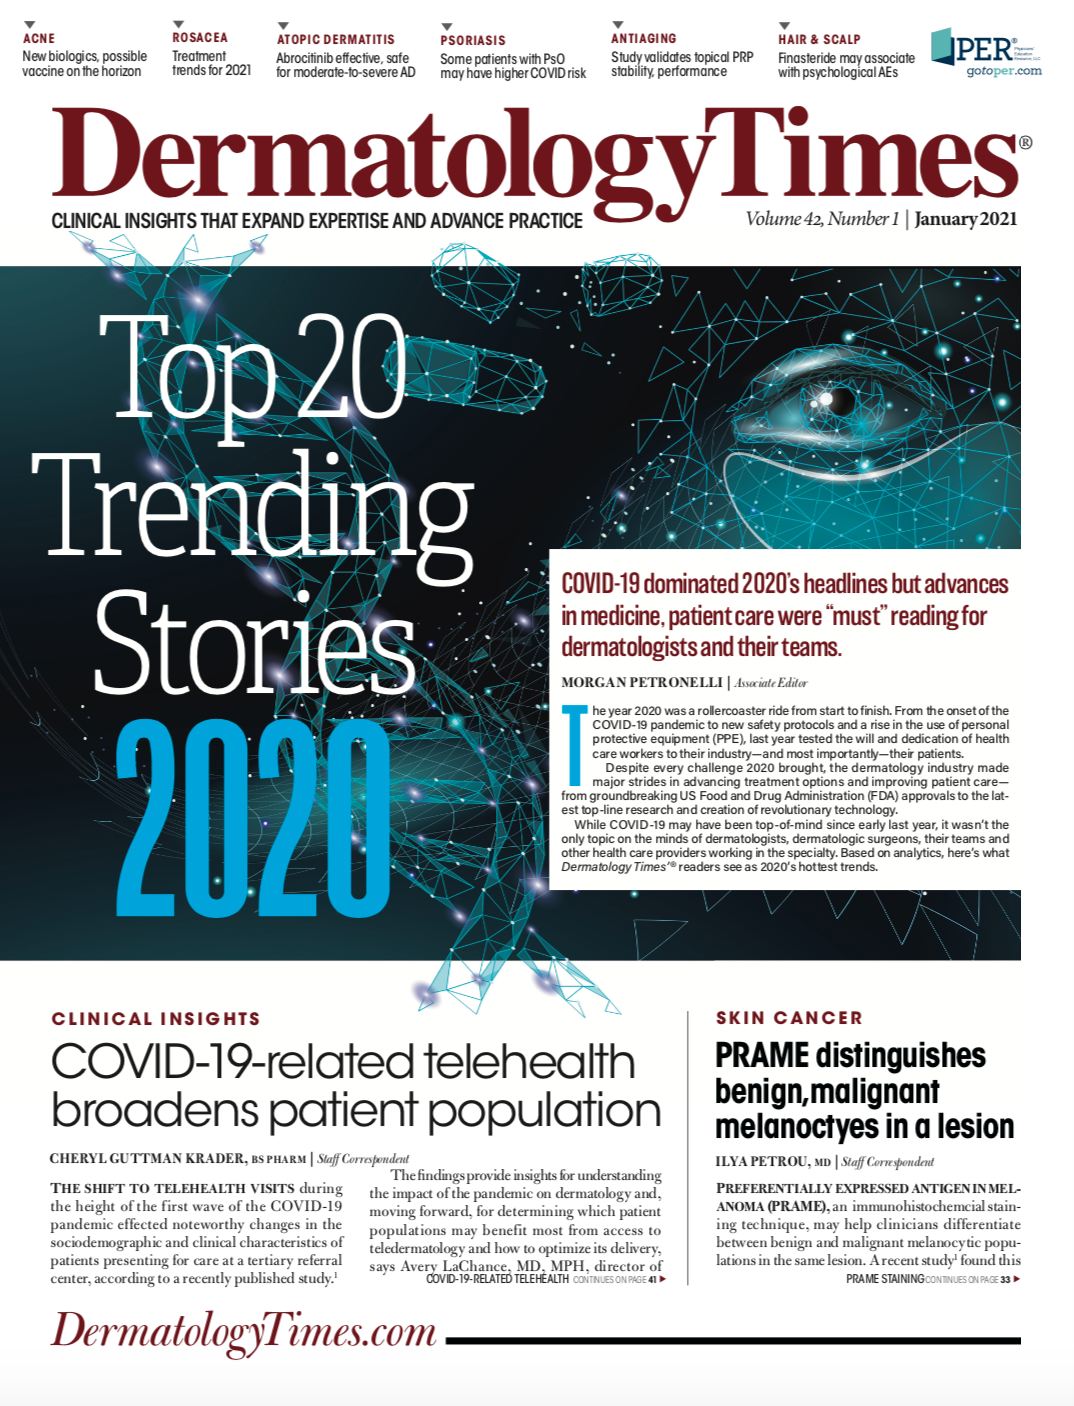 Dermatology Times, January 2021 (Vol. 42, No. 1)